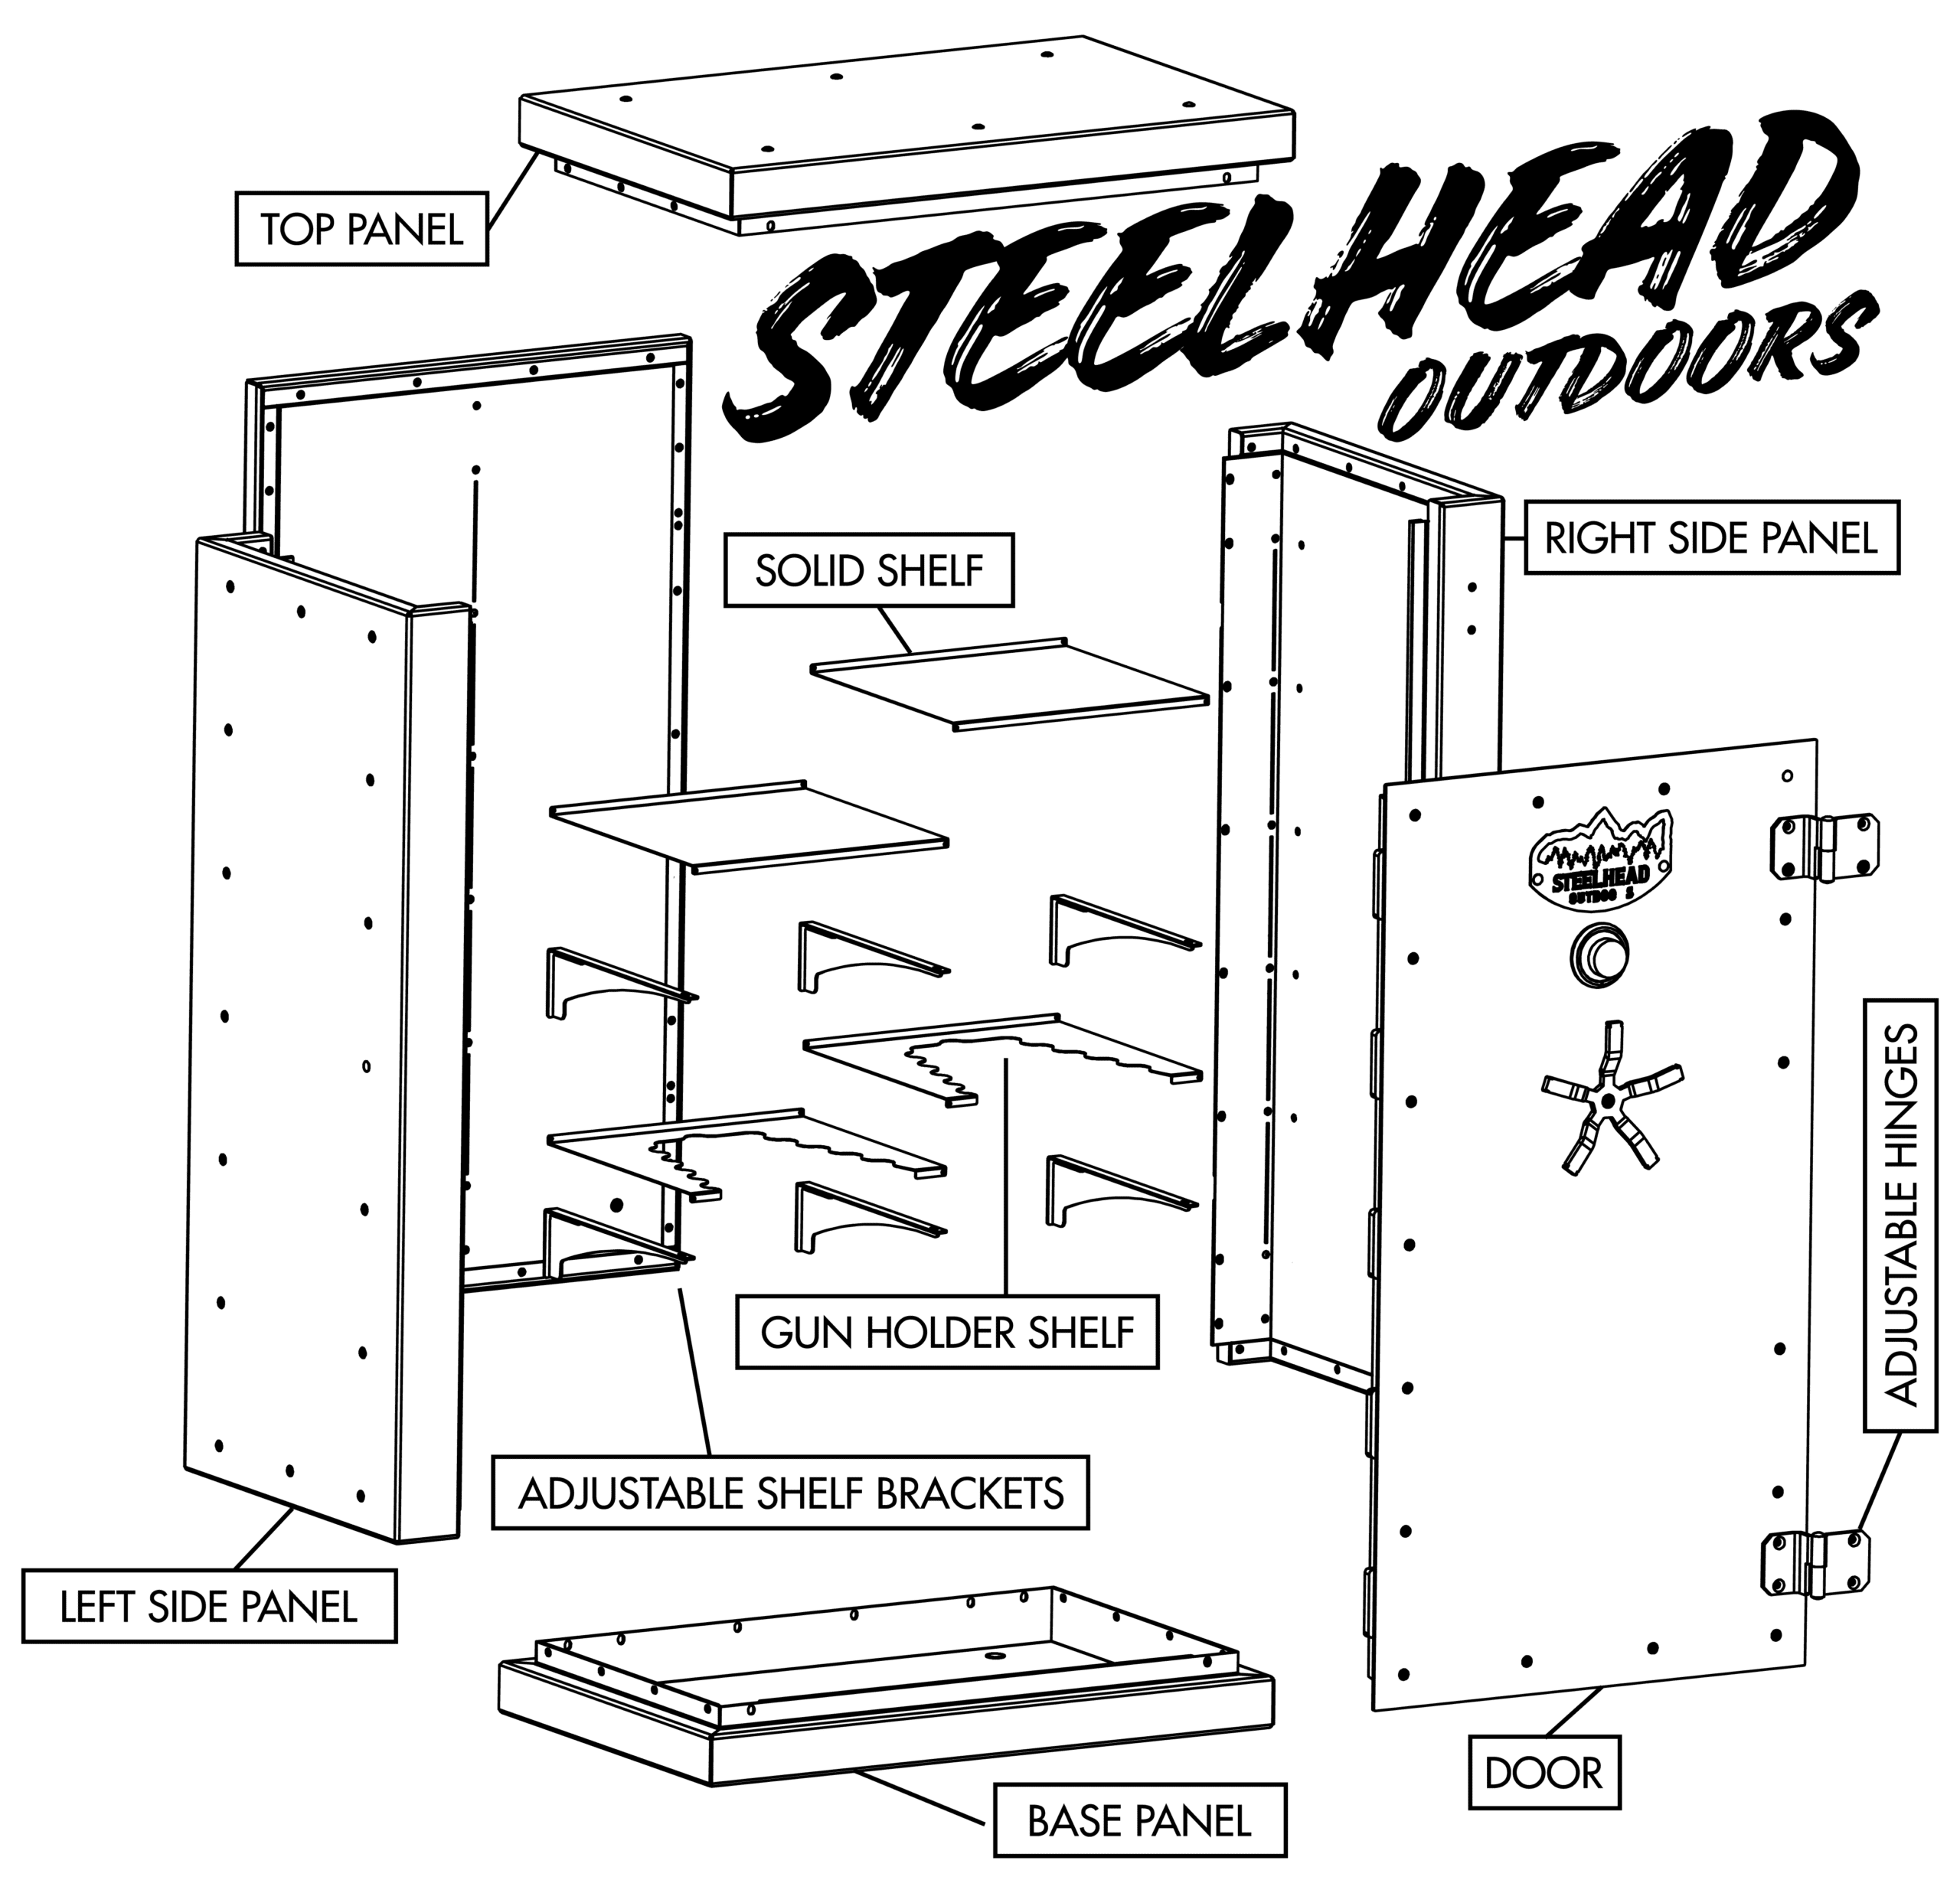 Steelhead Outdoors gun safe drawing of parts